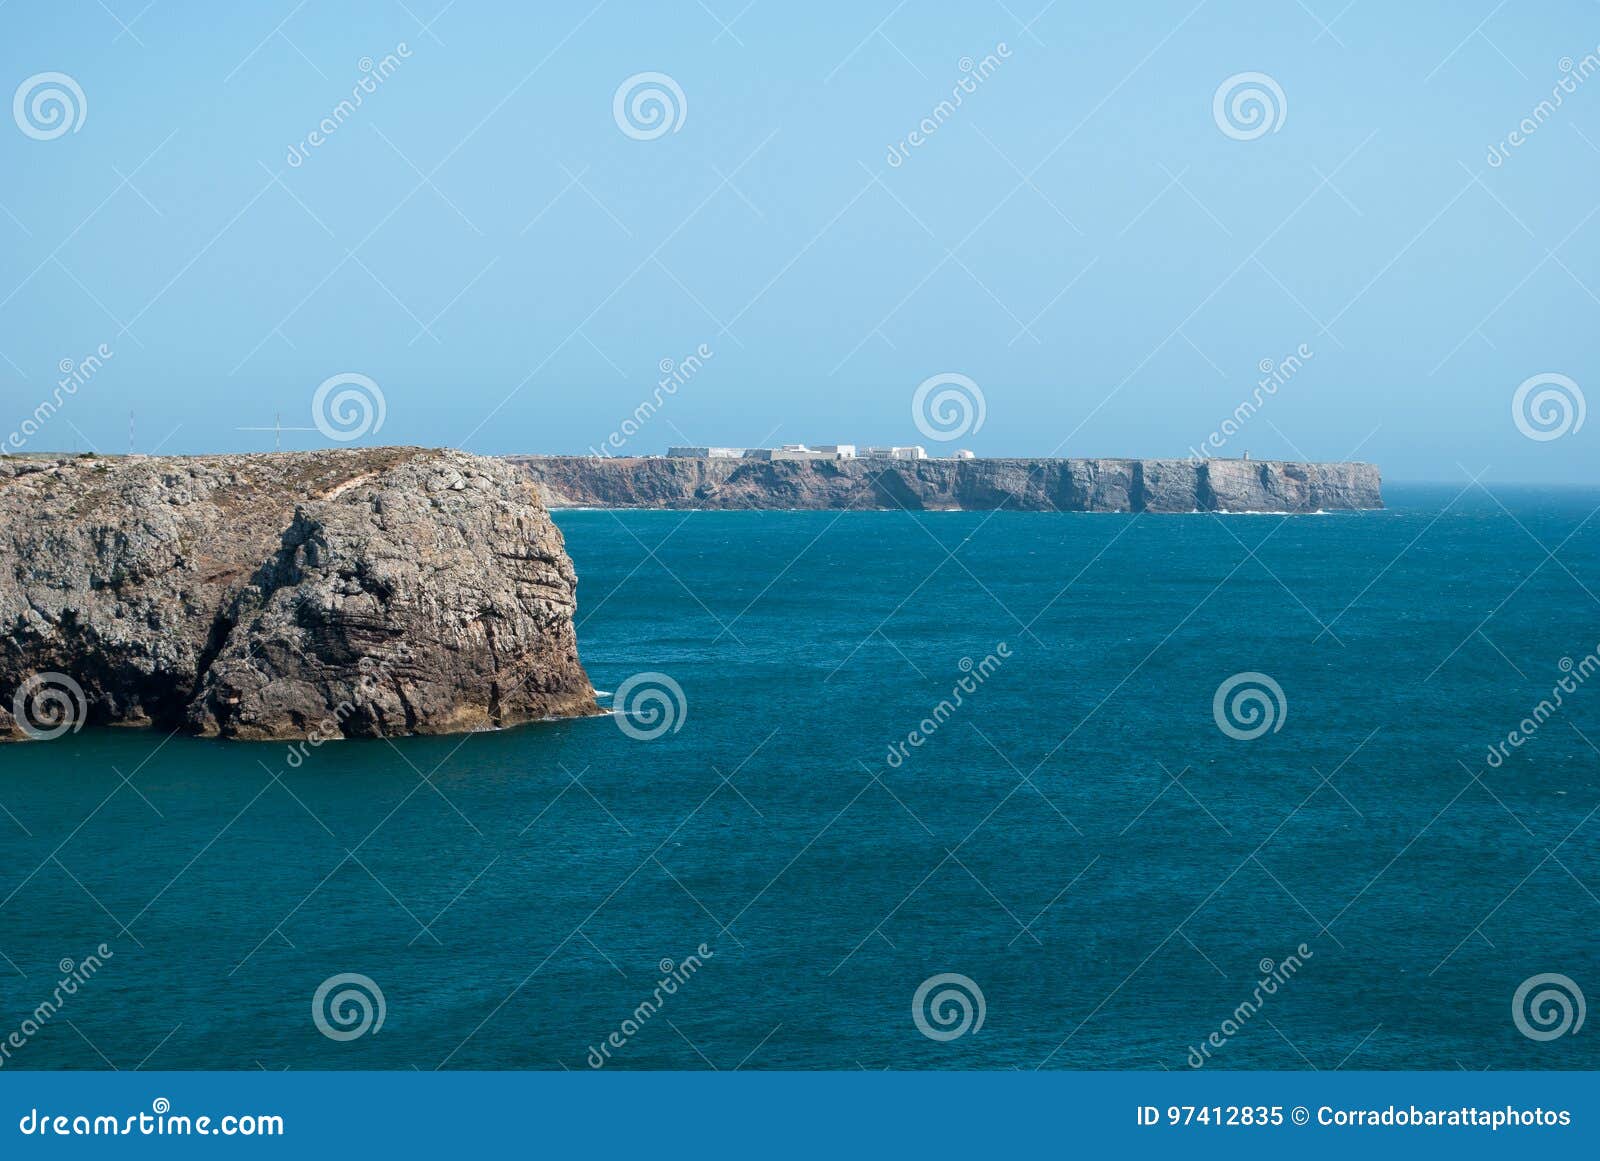 the beautiful jagged coastline on the atlantic ocean with a blue sea